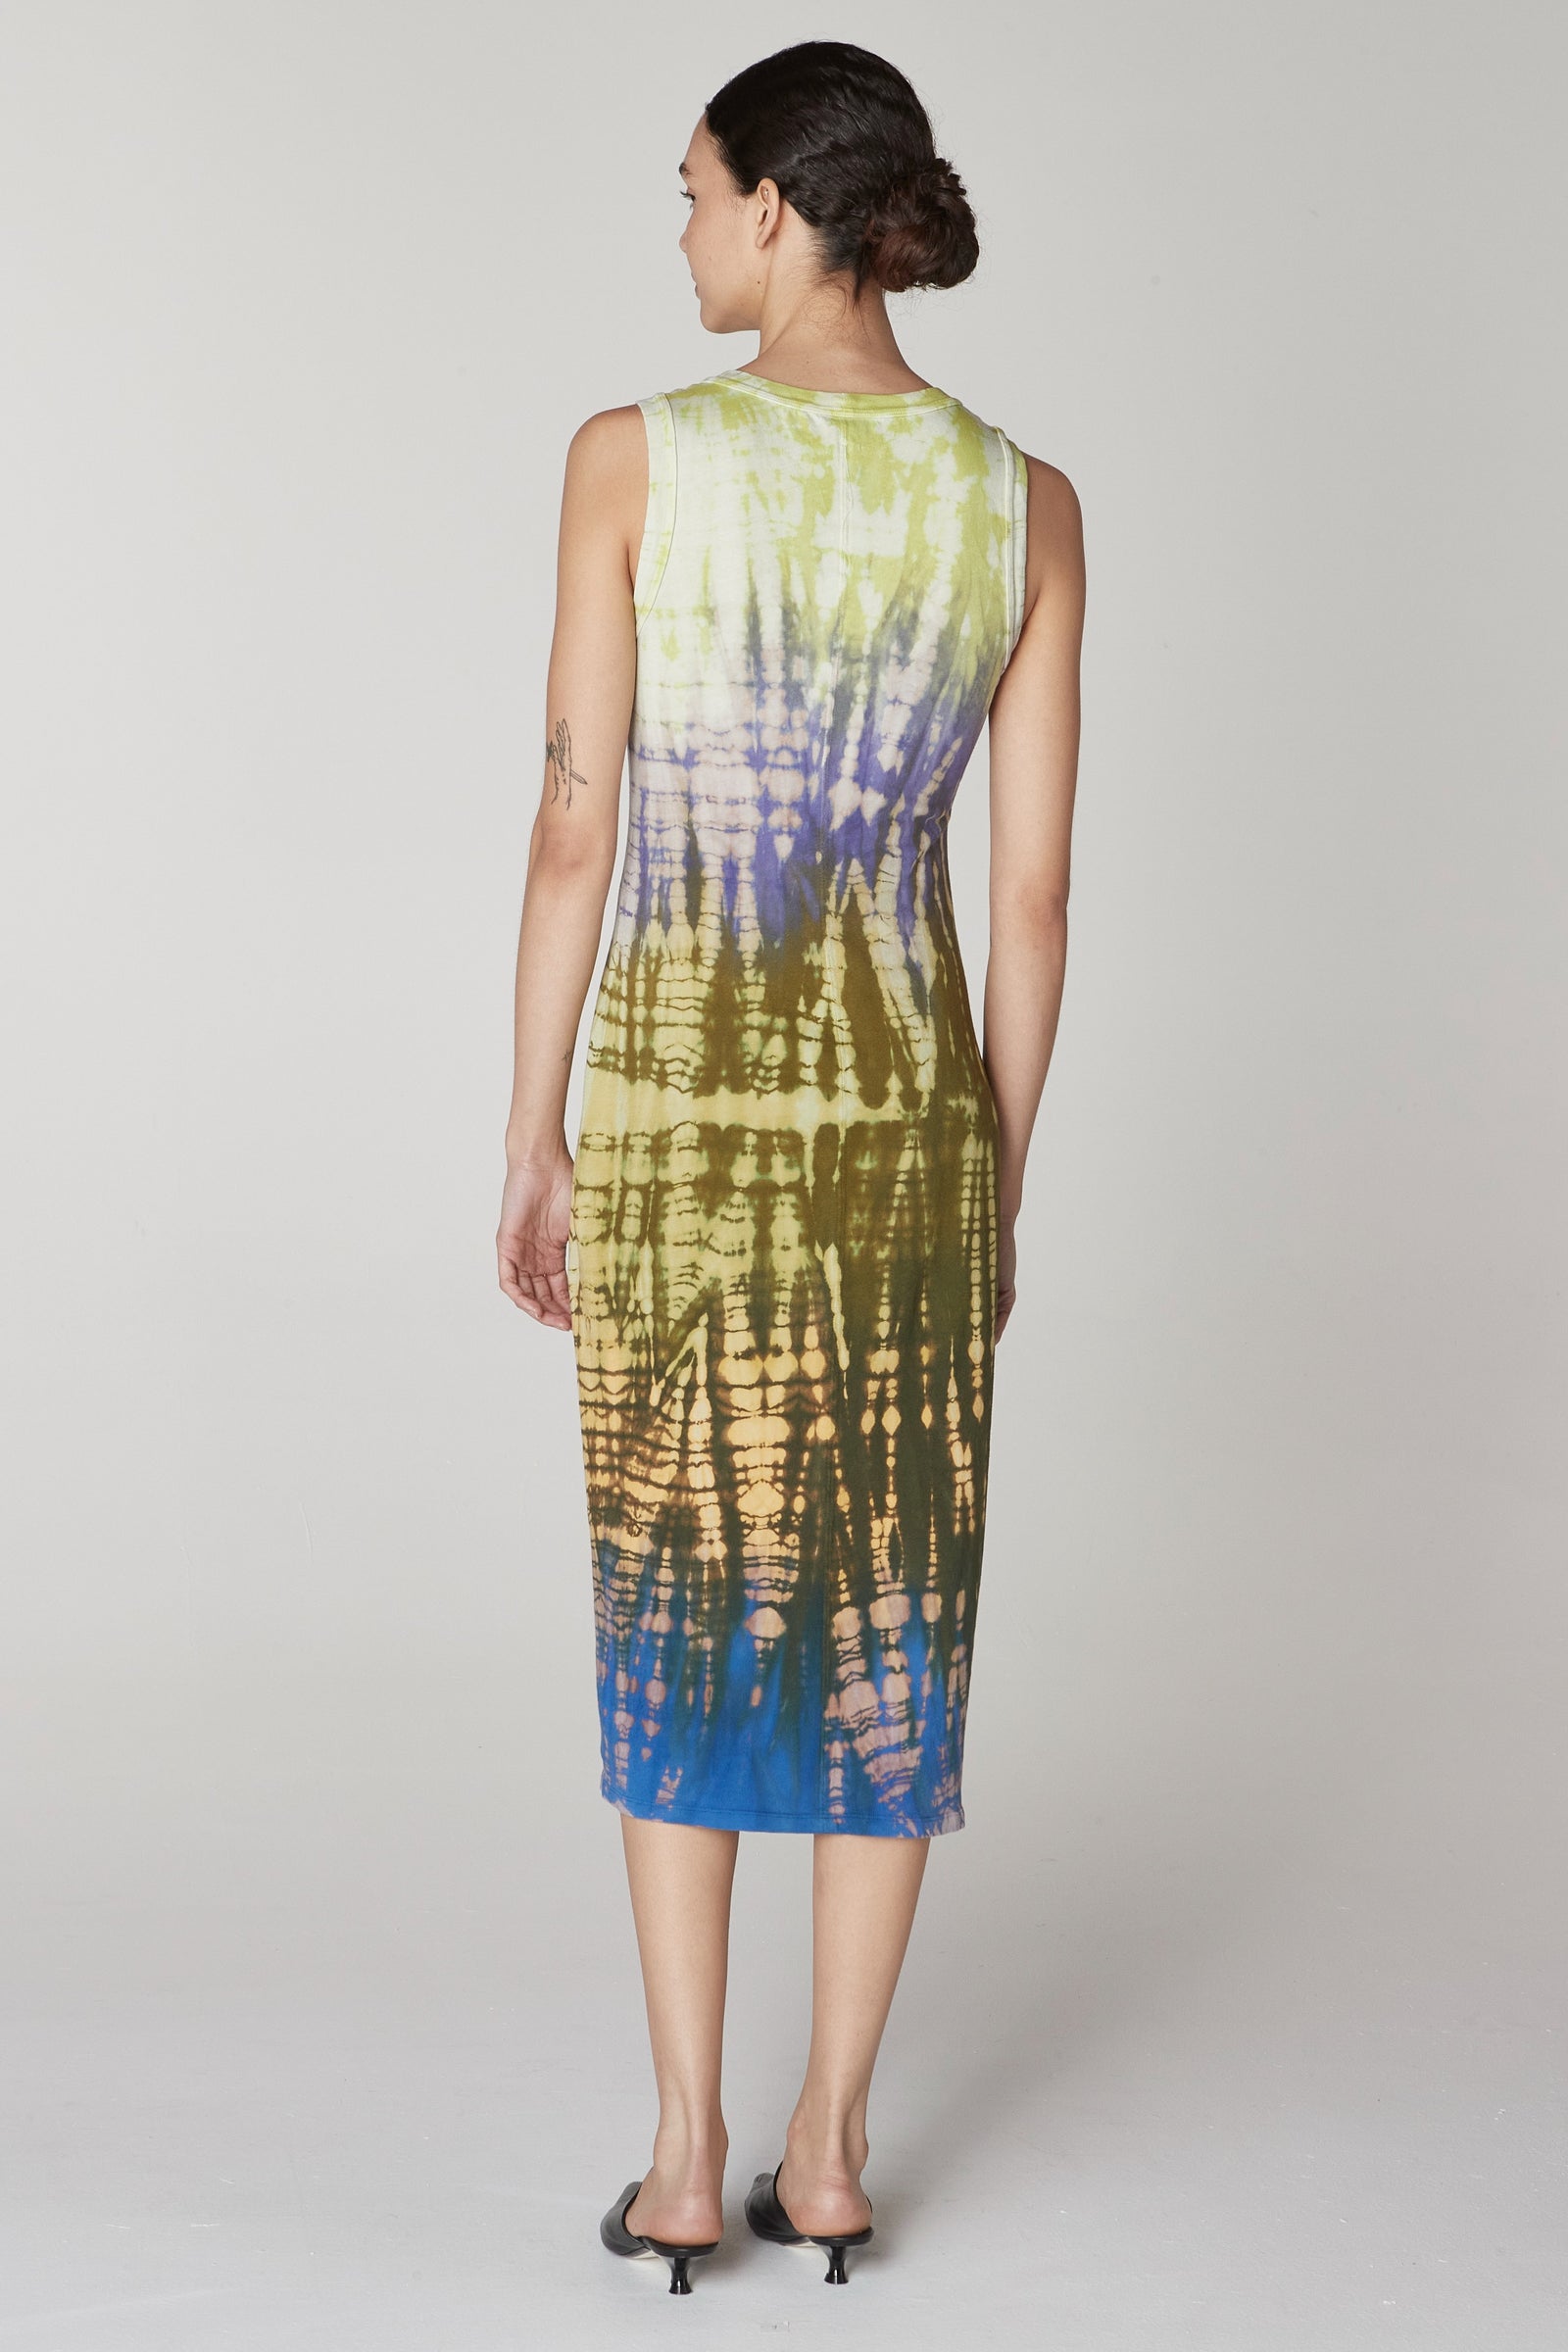 Moss/Lavender Tr Sleeveless Jerry Dress